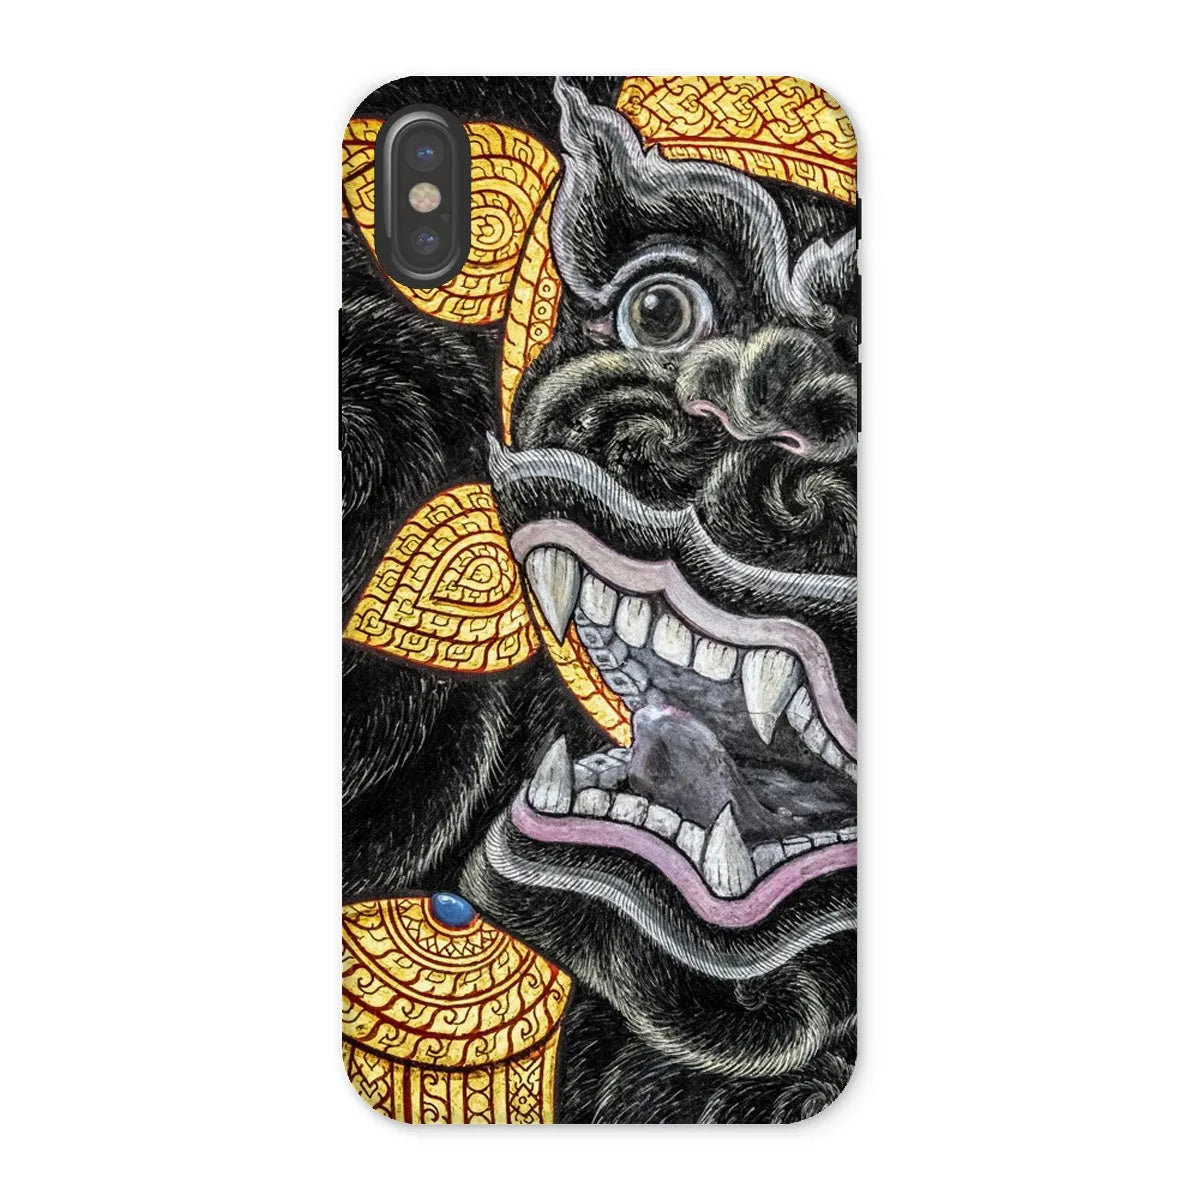 Monkey Magic - Thai Aesthetic Animal Art Phone Case - Iphone x / Matte - Mobile Phone Cases - Aesthetic Art